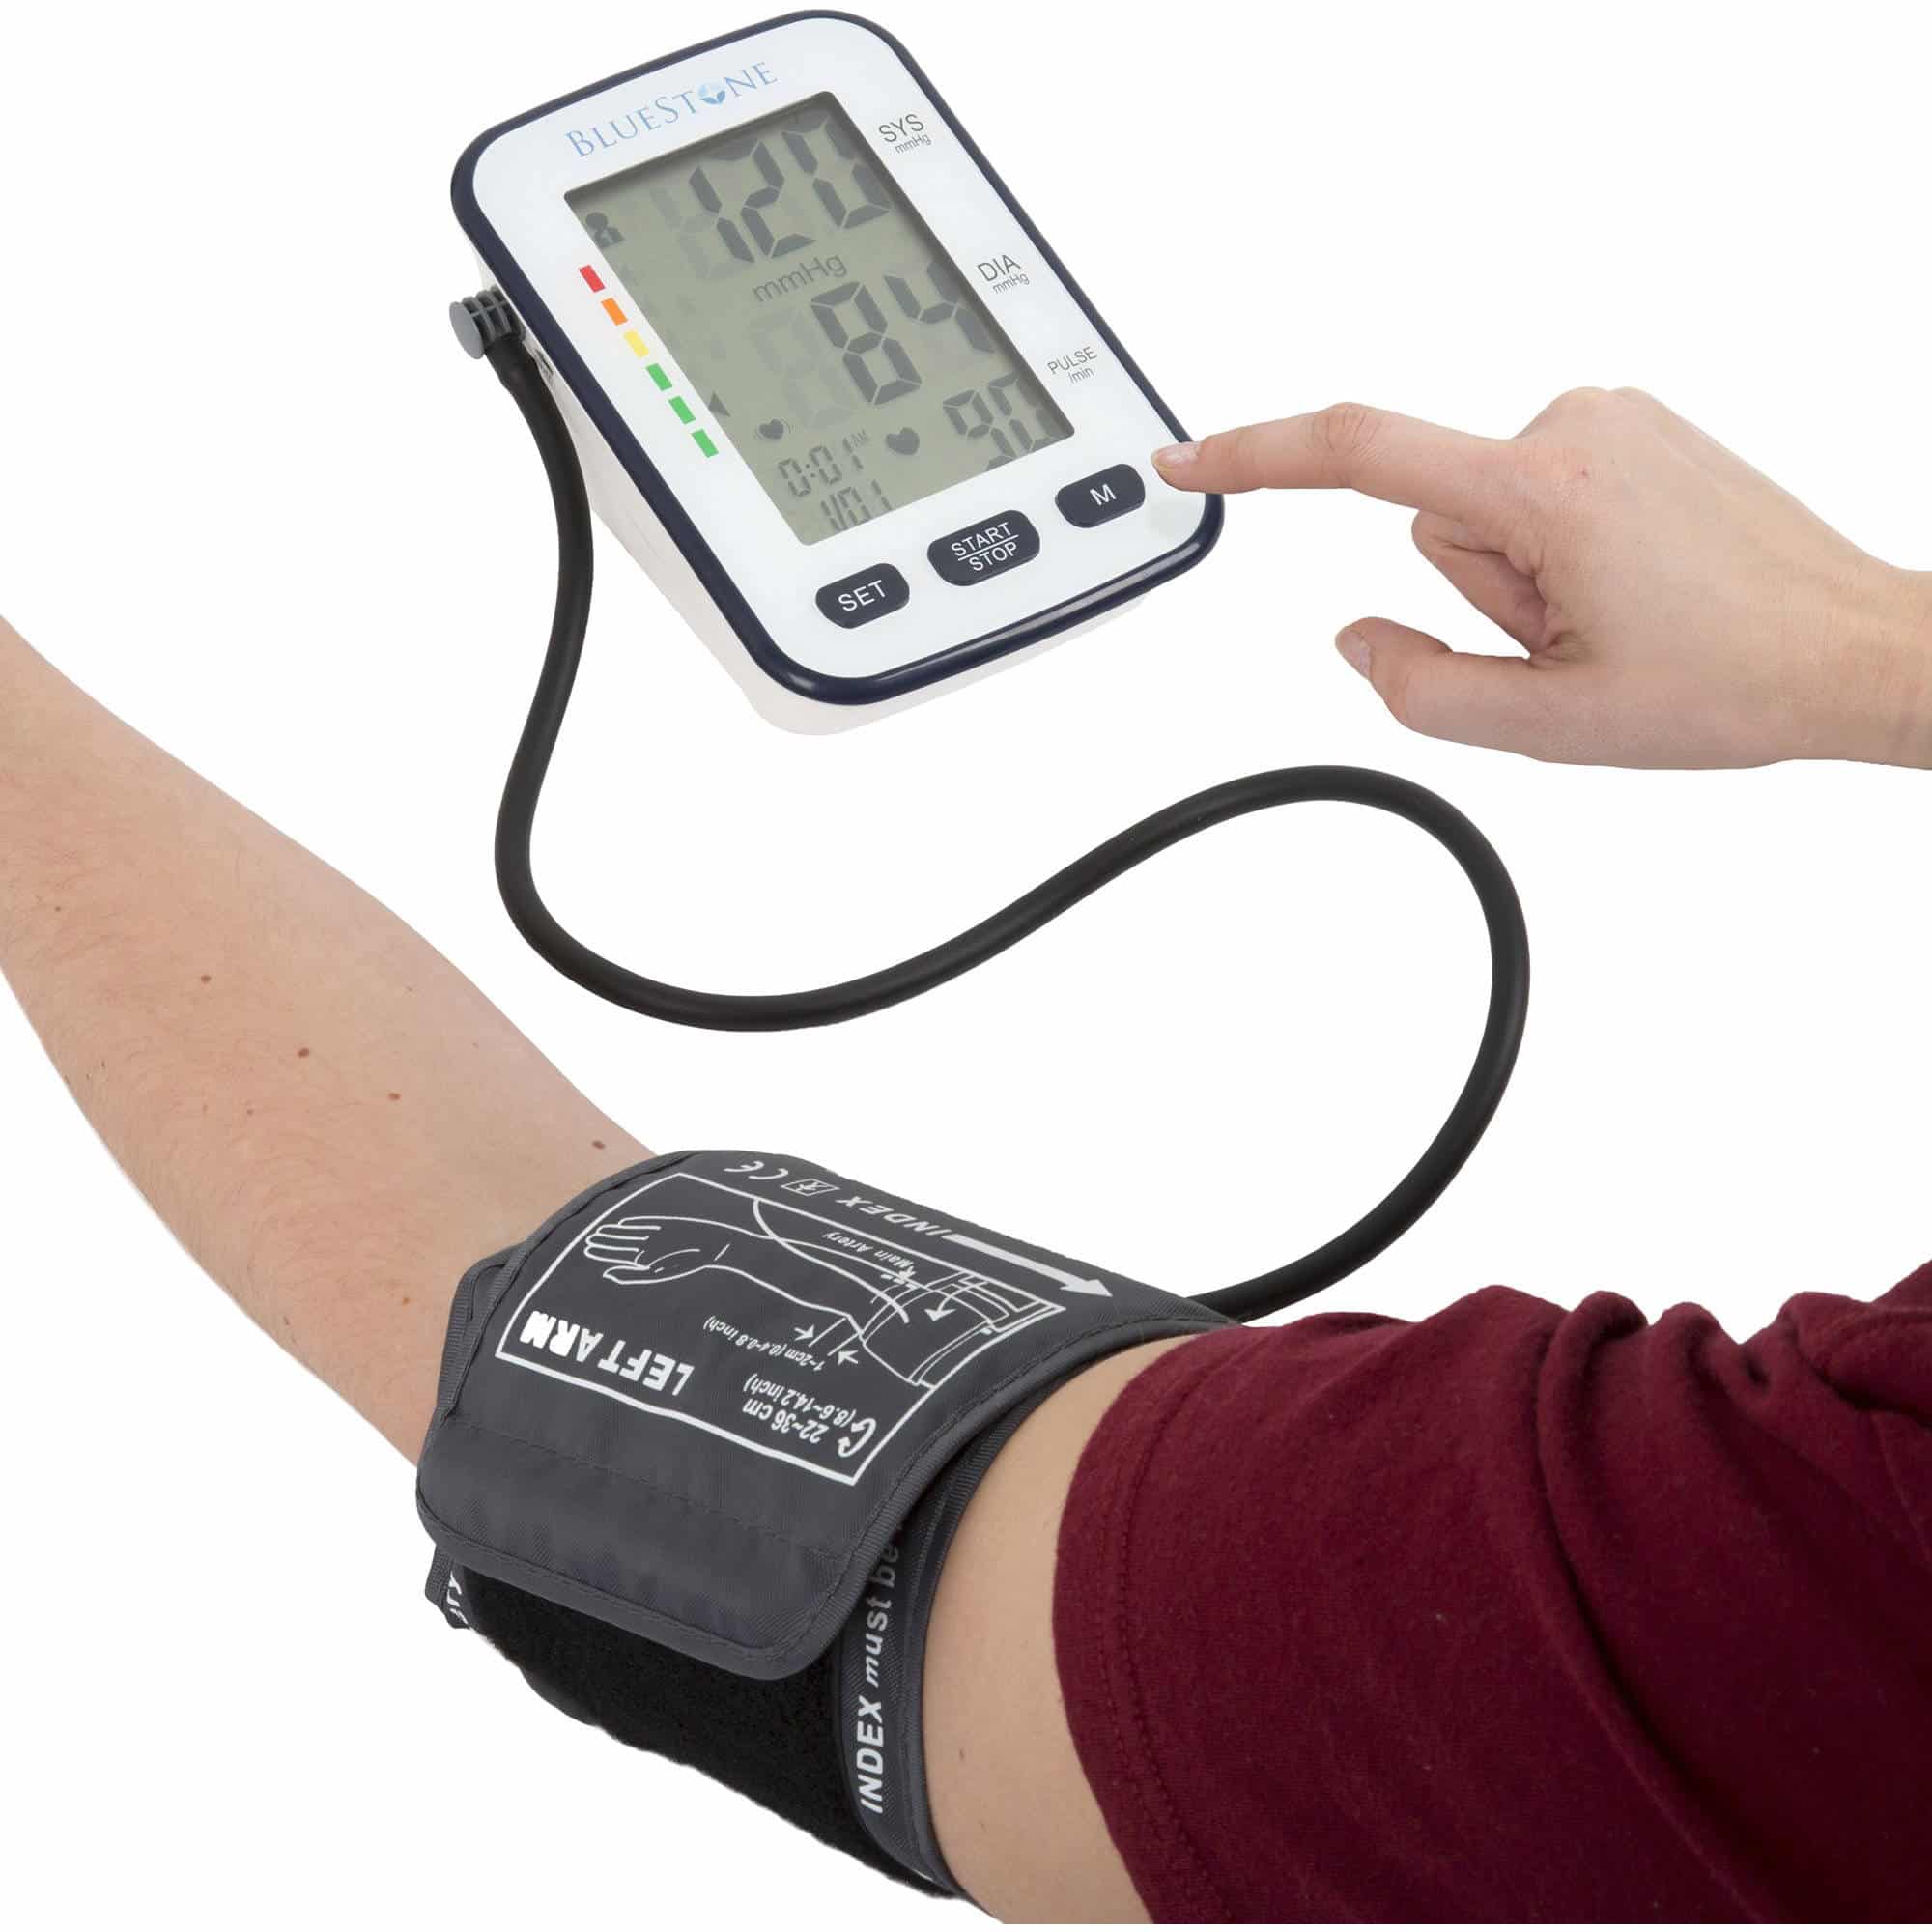 Bluestone Automatic Upper Arm Blood Pressure Monitor